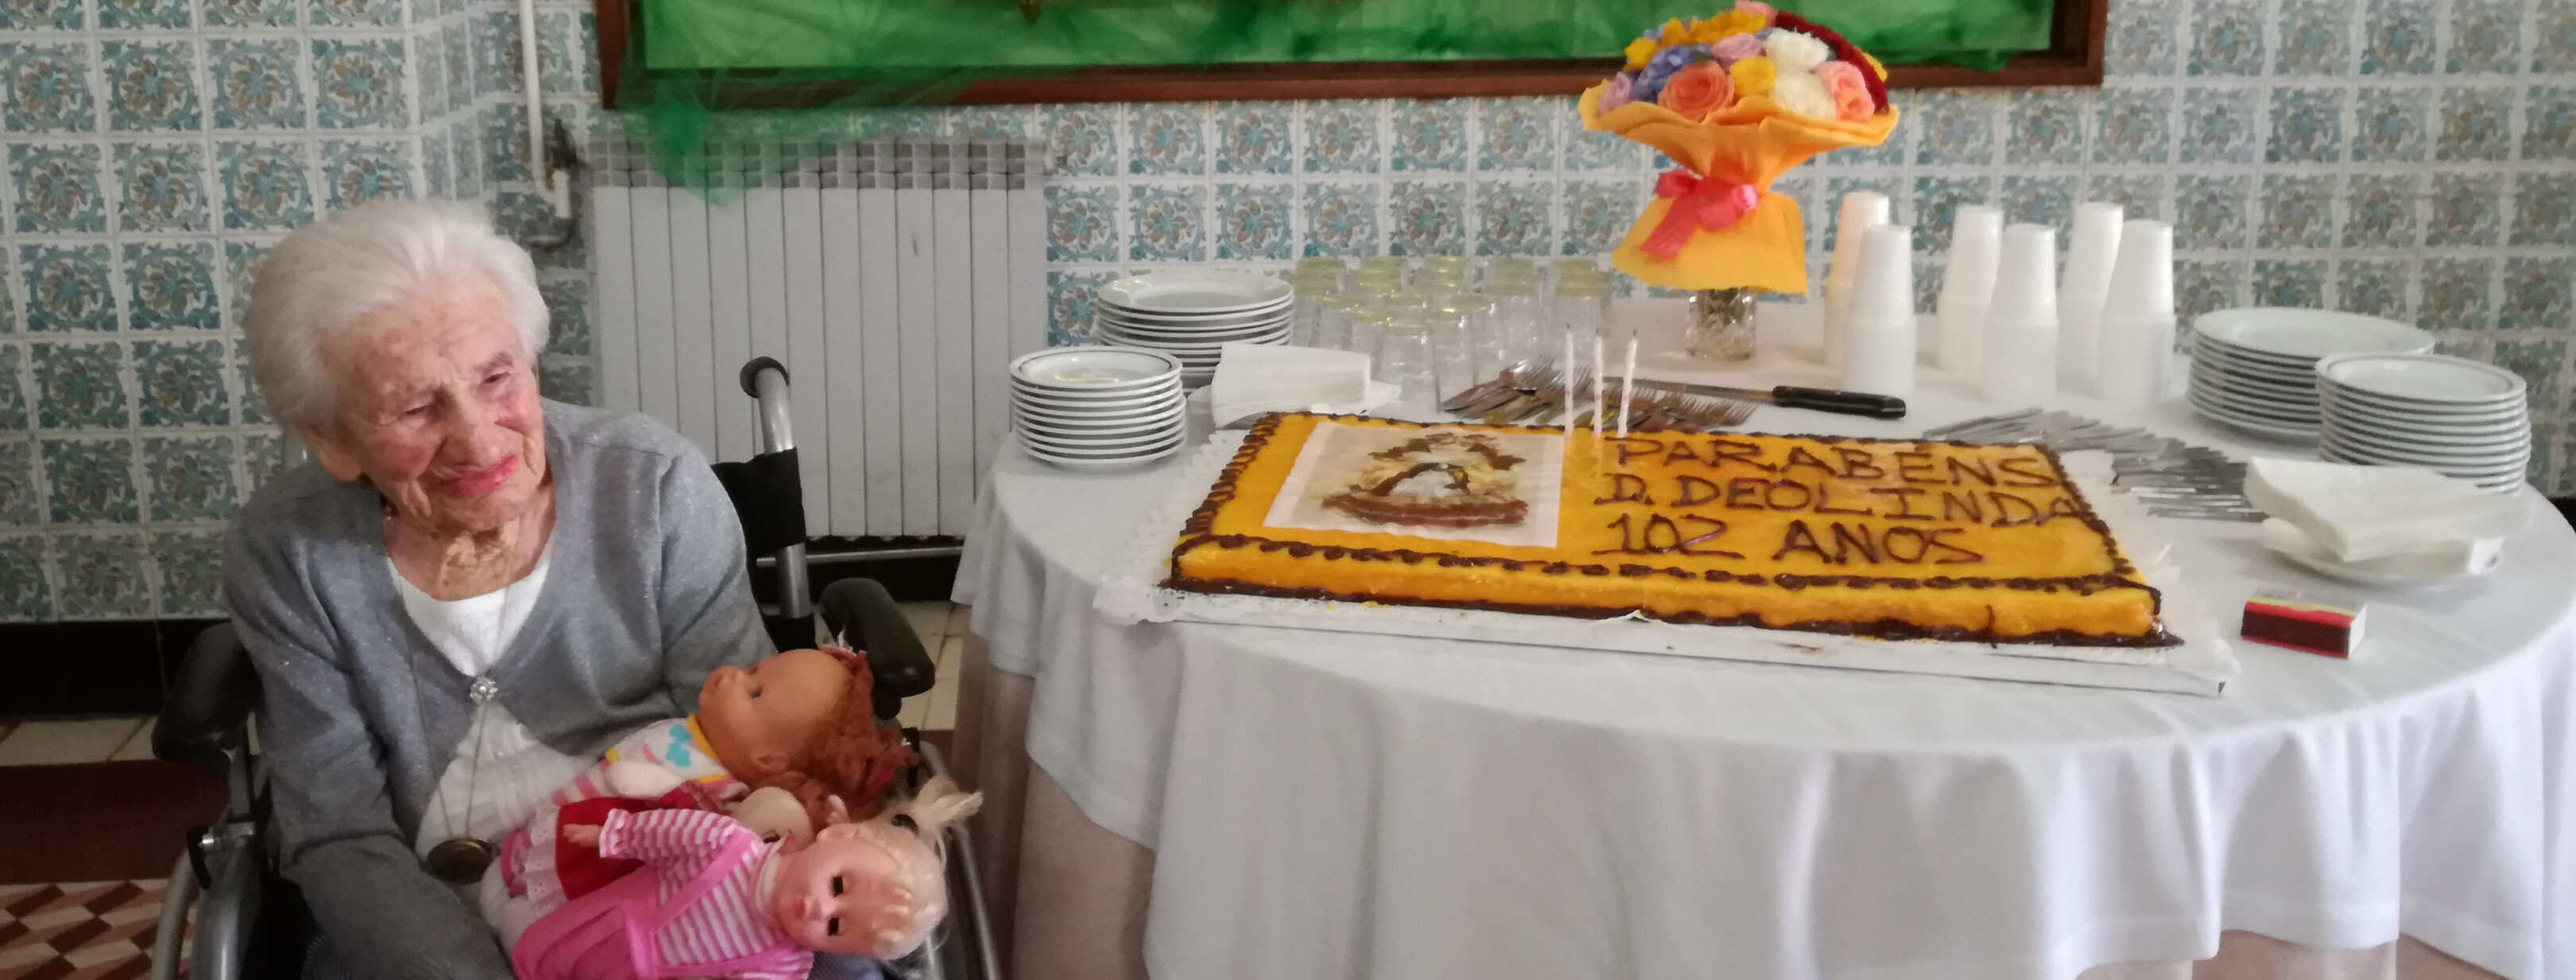 deolinda-leal-utente-do-lar-da-misericordia-celebra-102-anos-de-vida